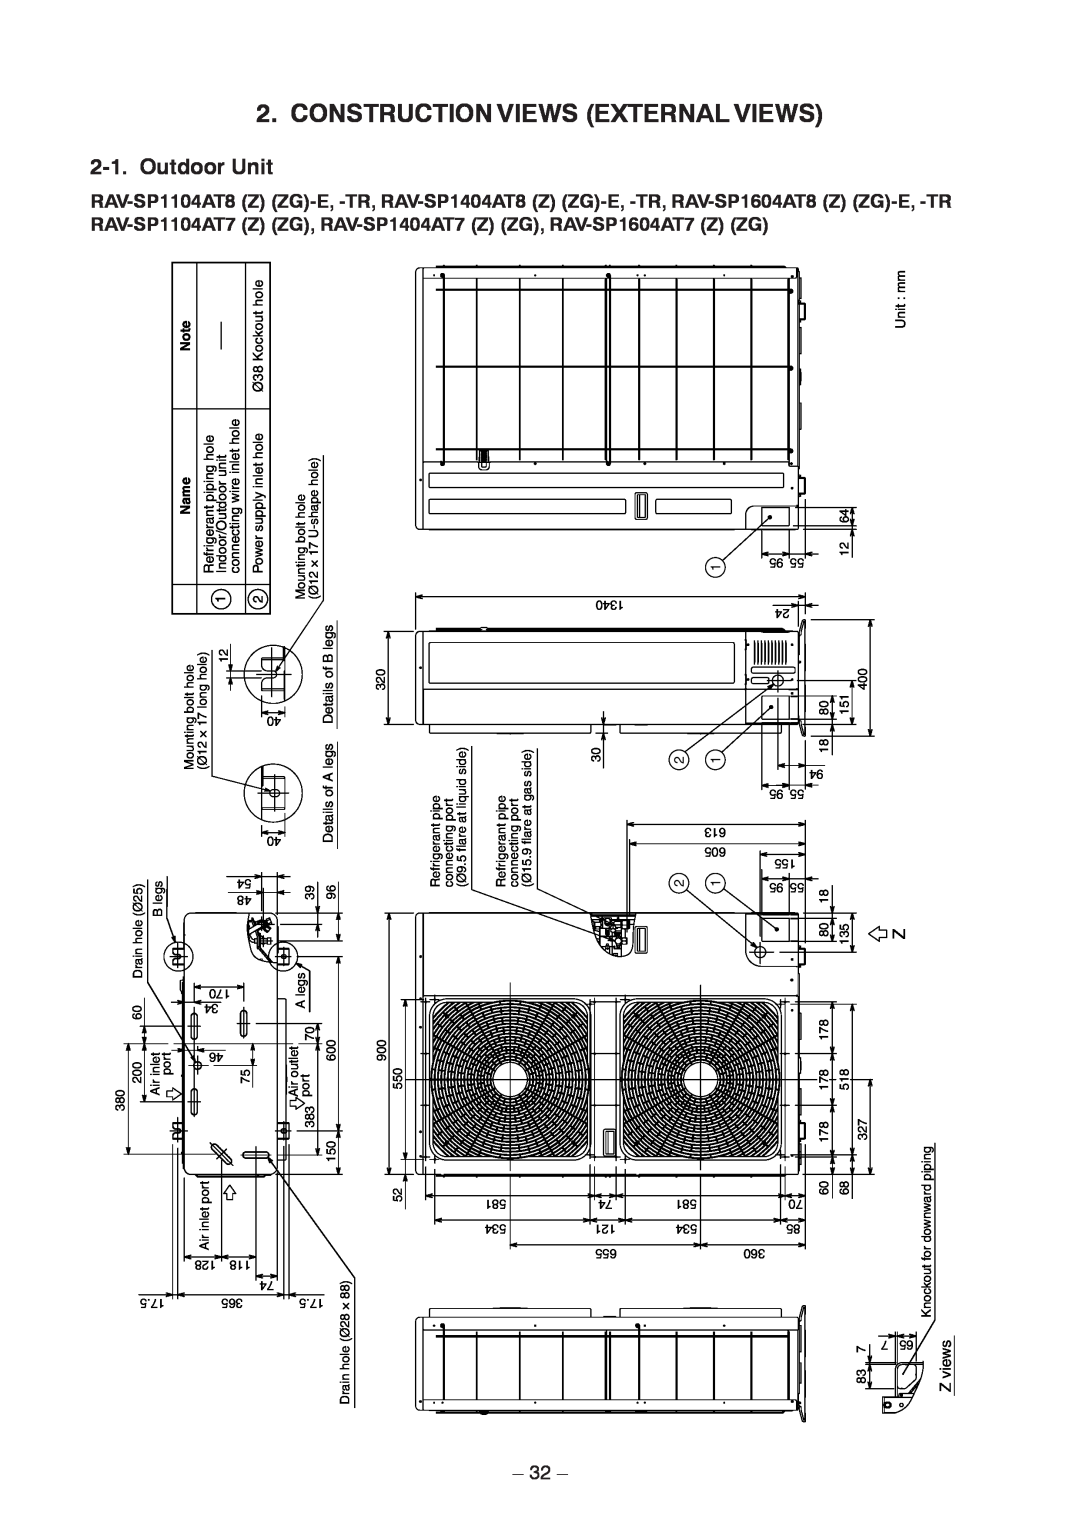 Toshiba RAV-SP1104AT8ZG-E, RAV-SP1104AT8ZG-TR, RAV-SP1104AT8-TR Construction Views External Views, Outdoor Unit 